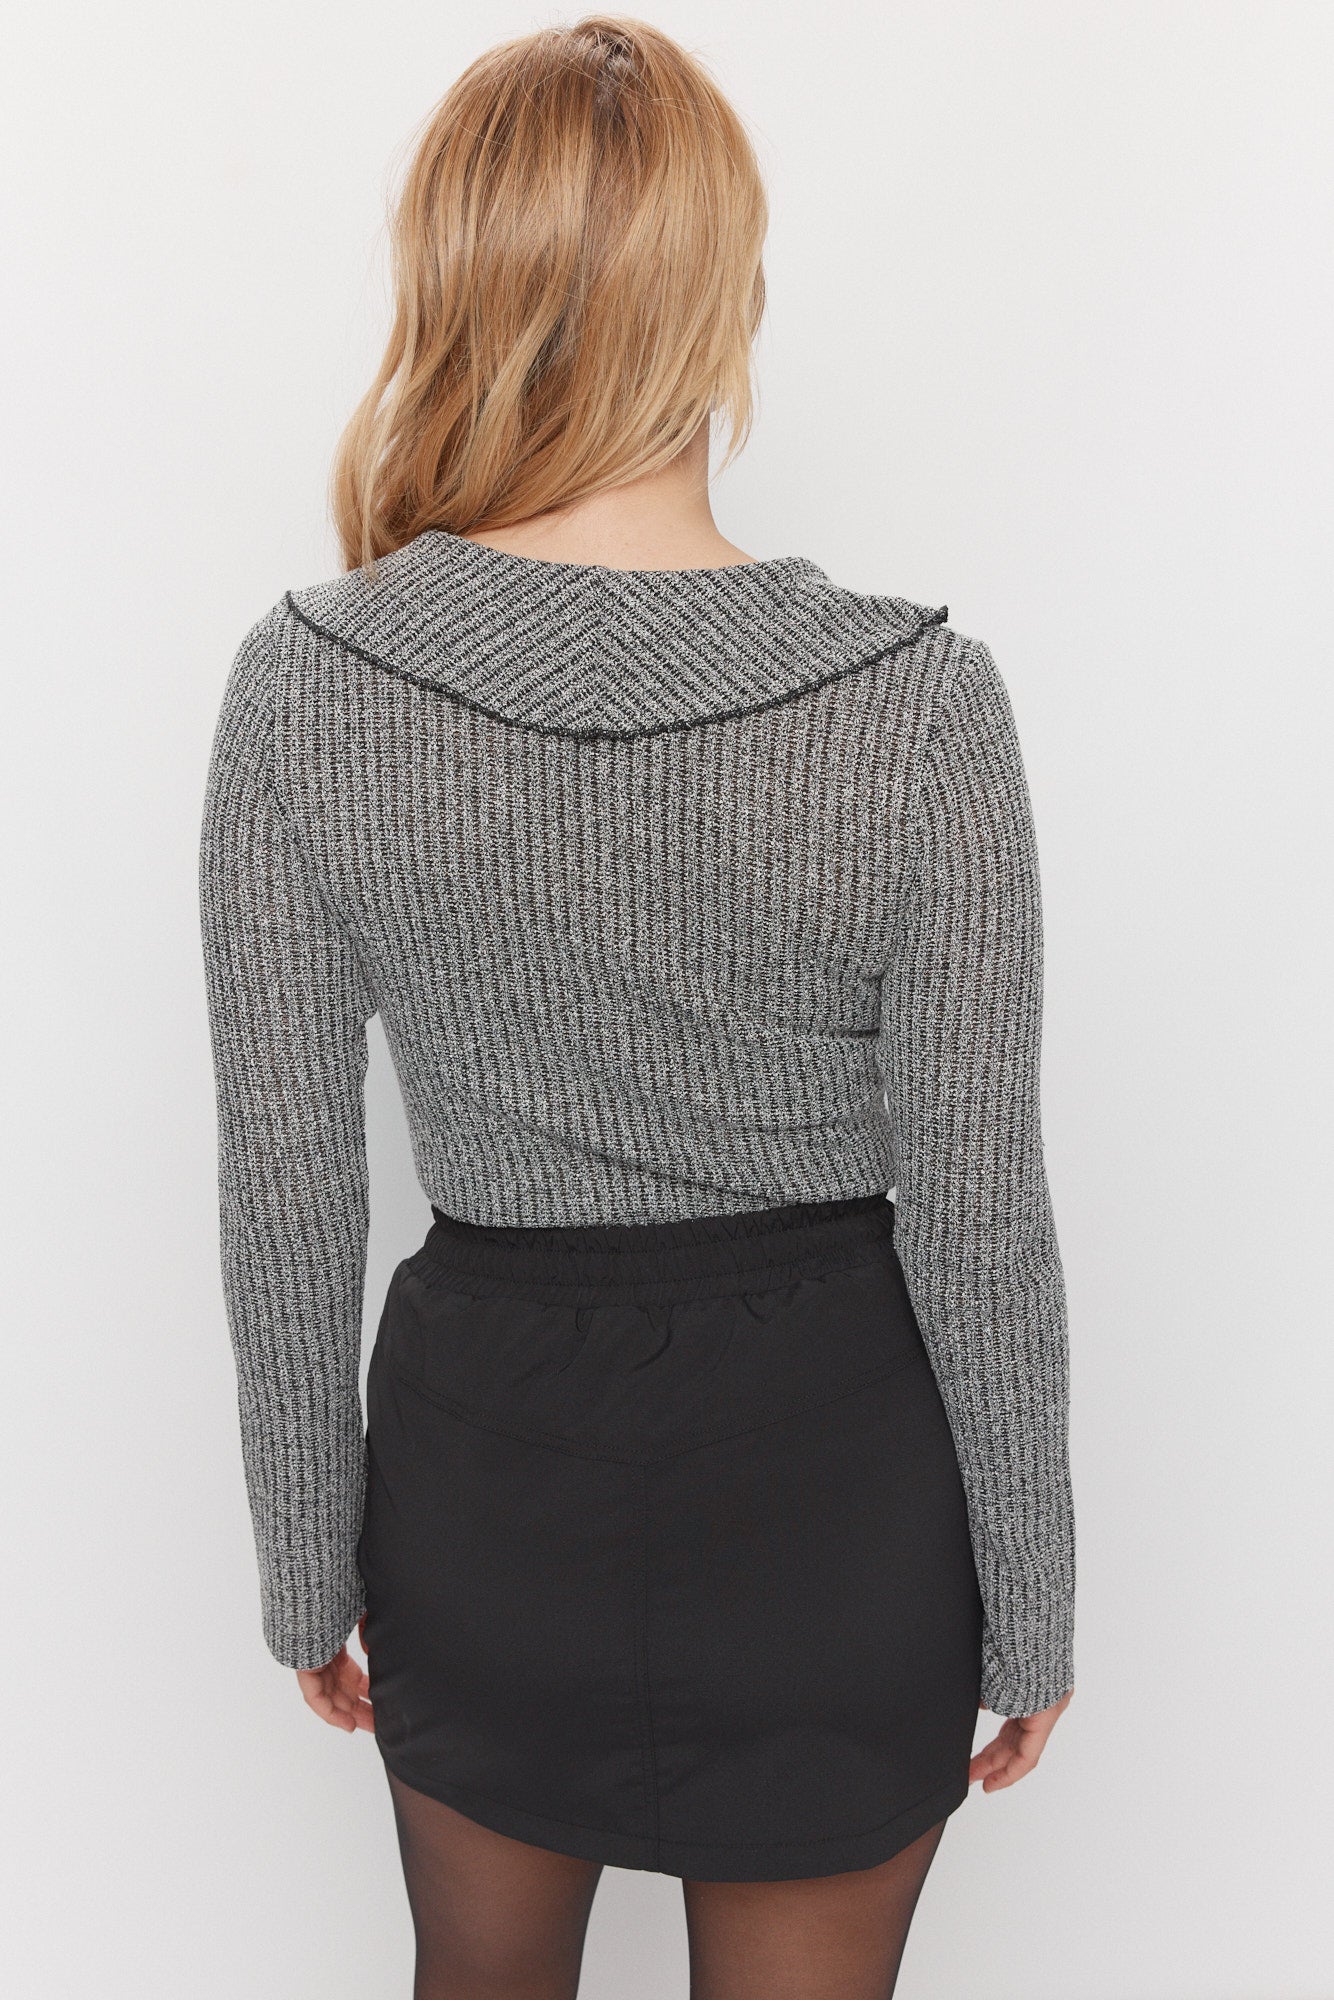 White and Black Multi Ruffle Sweater | Mercer